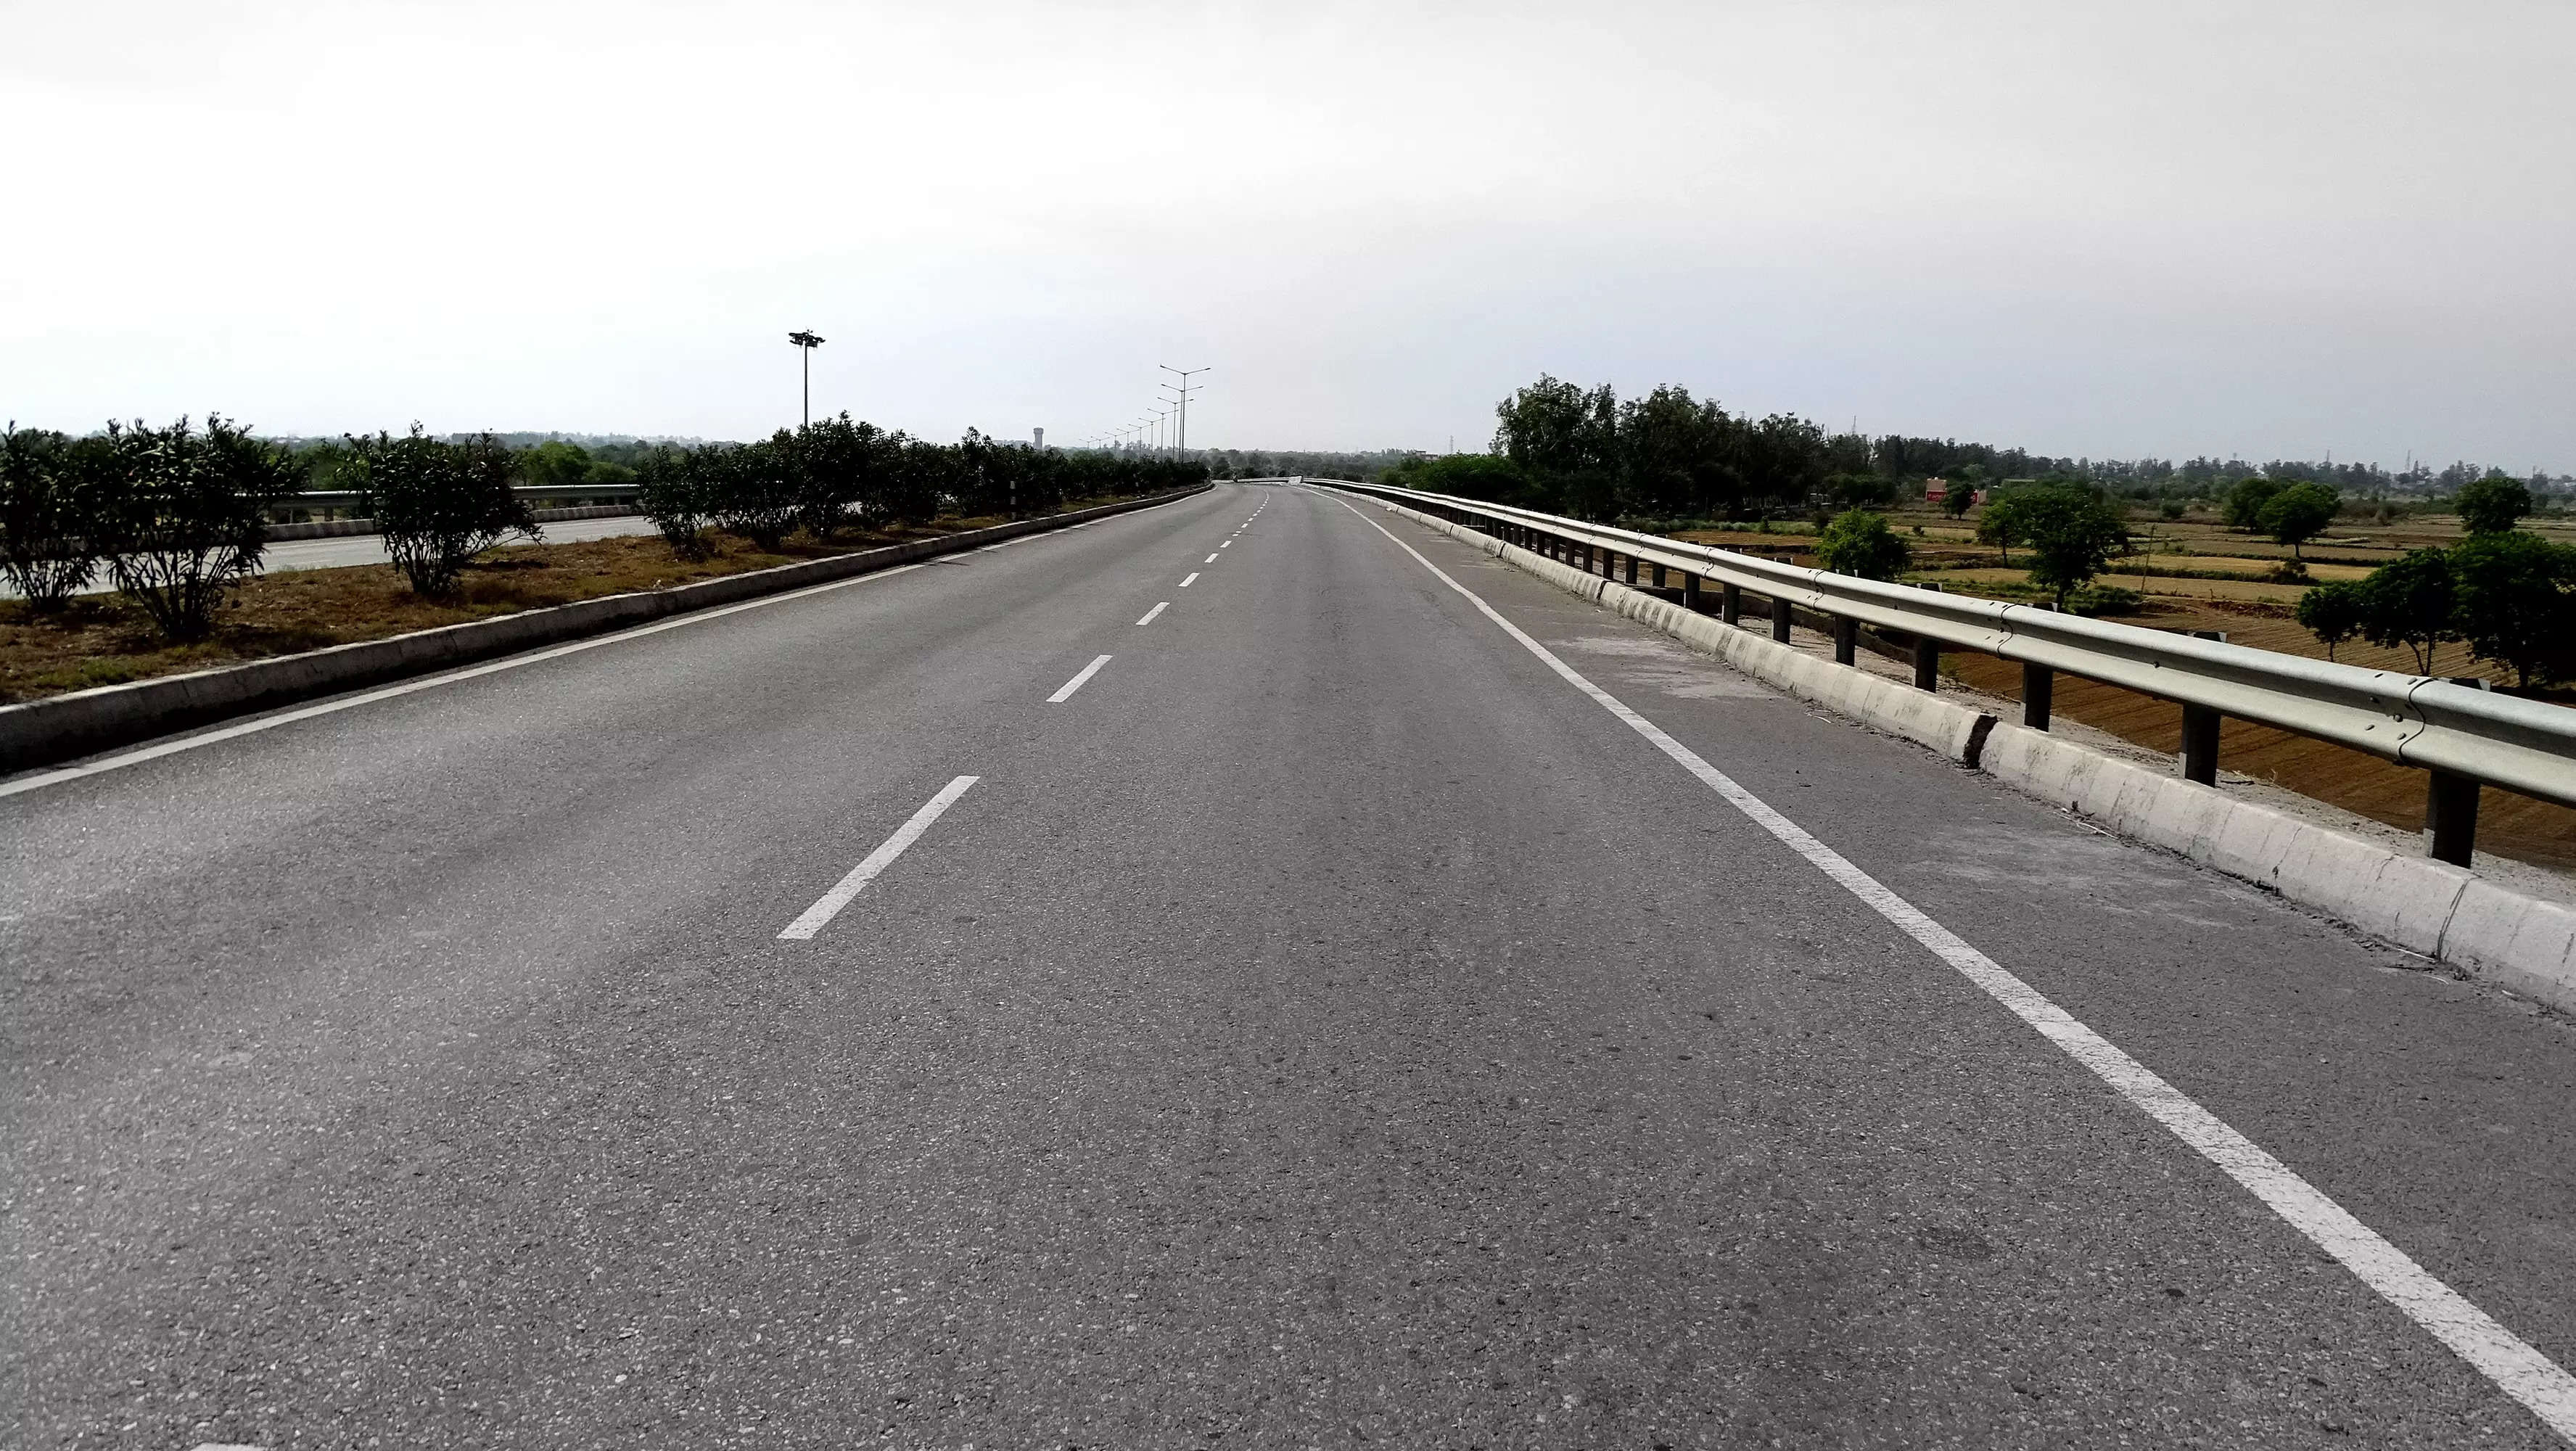 Trying to finish Mumbai-Goa highway in 9 months: Maharashtra minister Ravindra Chavan